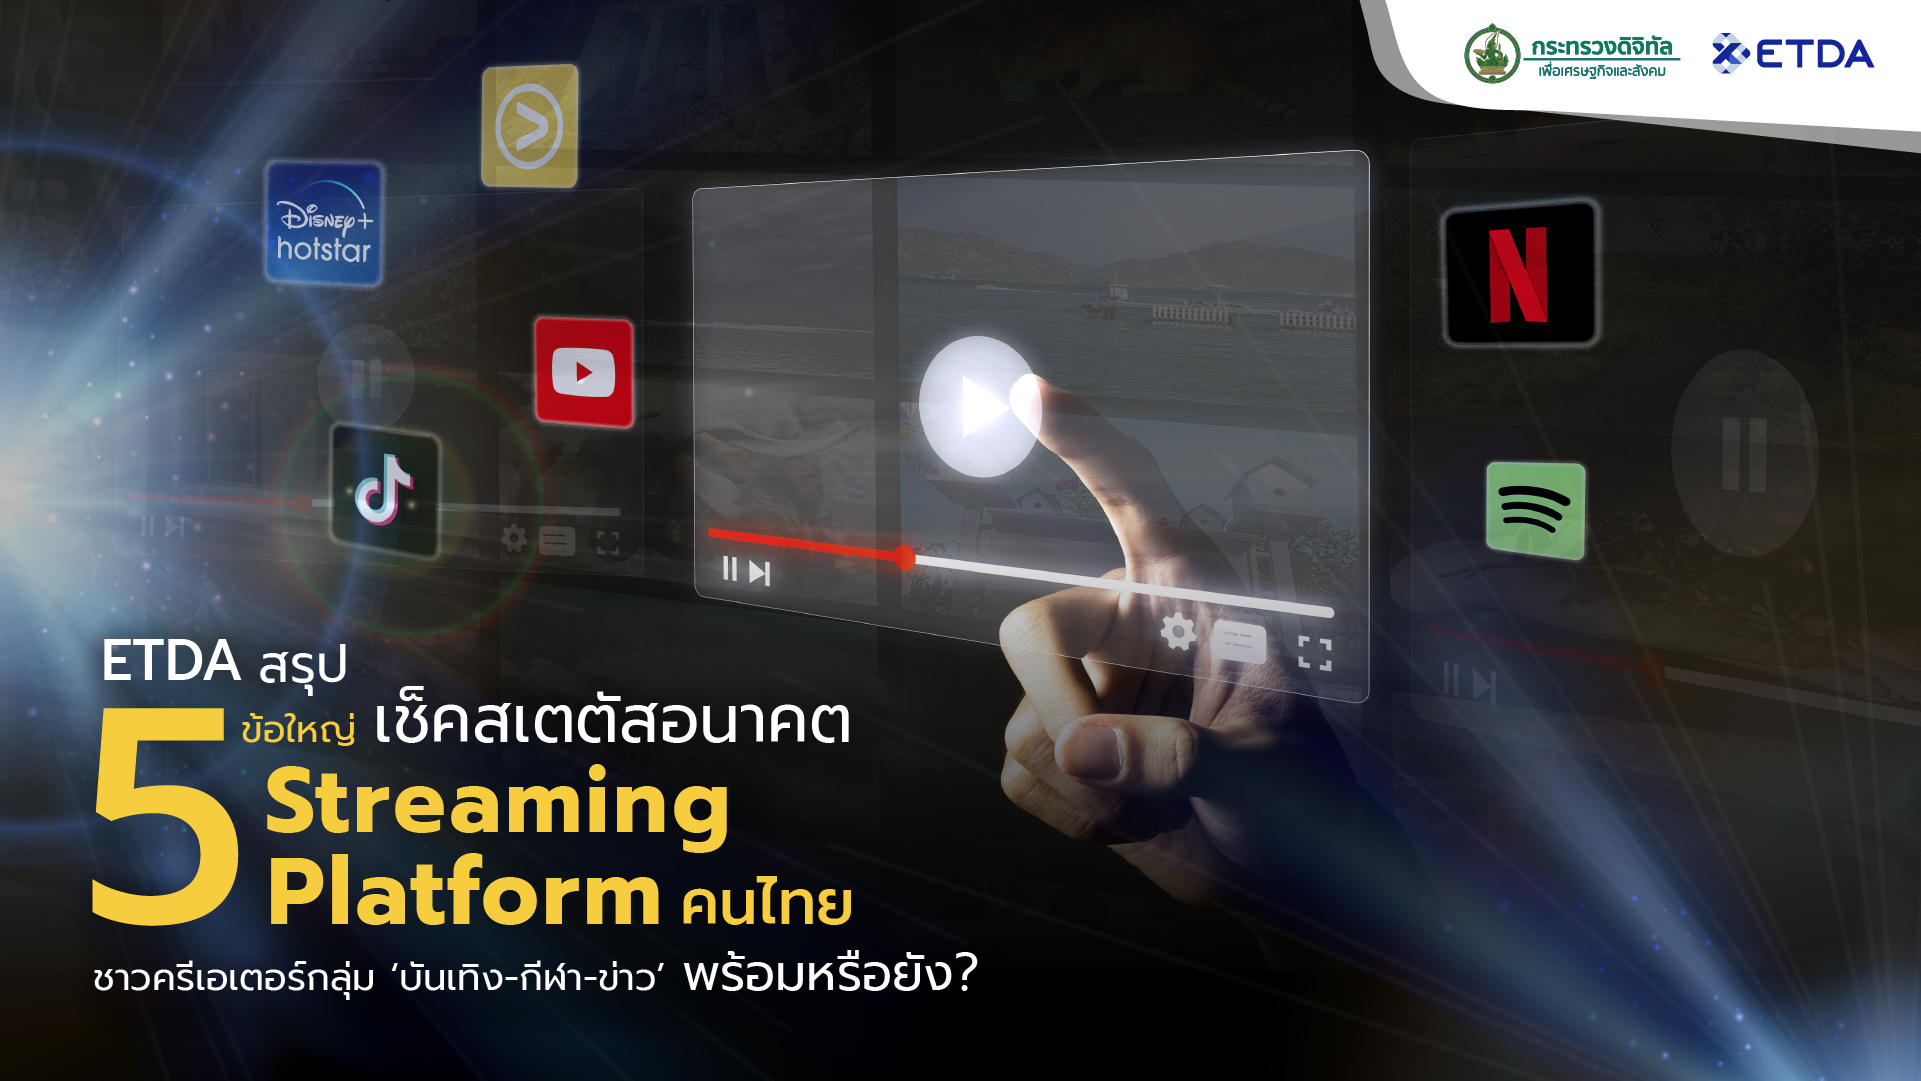 ETDA สรุป 5 ข้อใหญ่ เช็คสเตตัสอนาคต Streaming Platform คนไทย ชาวครีเอเตอร์กลุ่ม ‘บันเทิง-กีฬา-ข่าว’